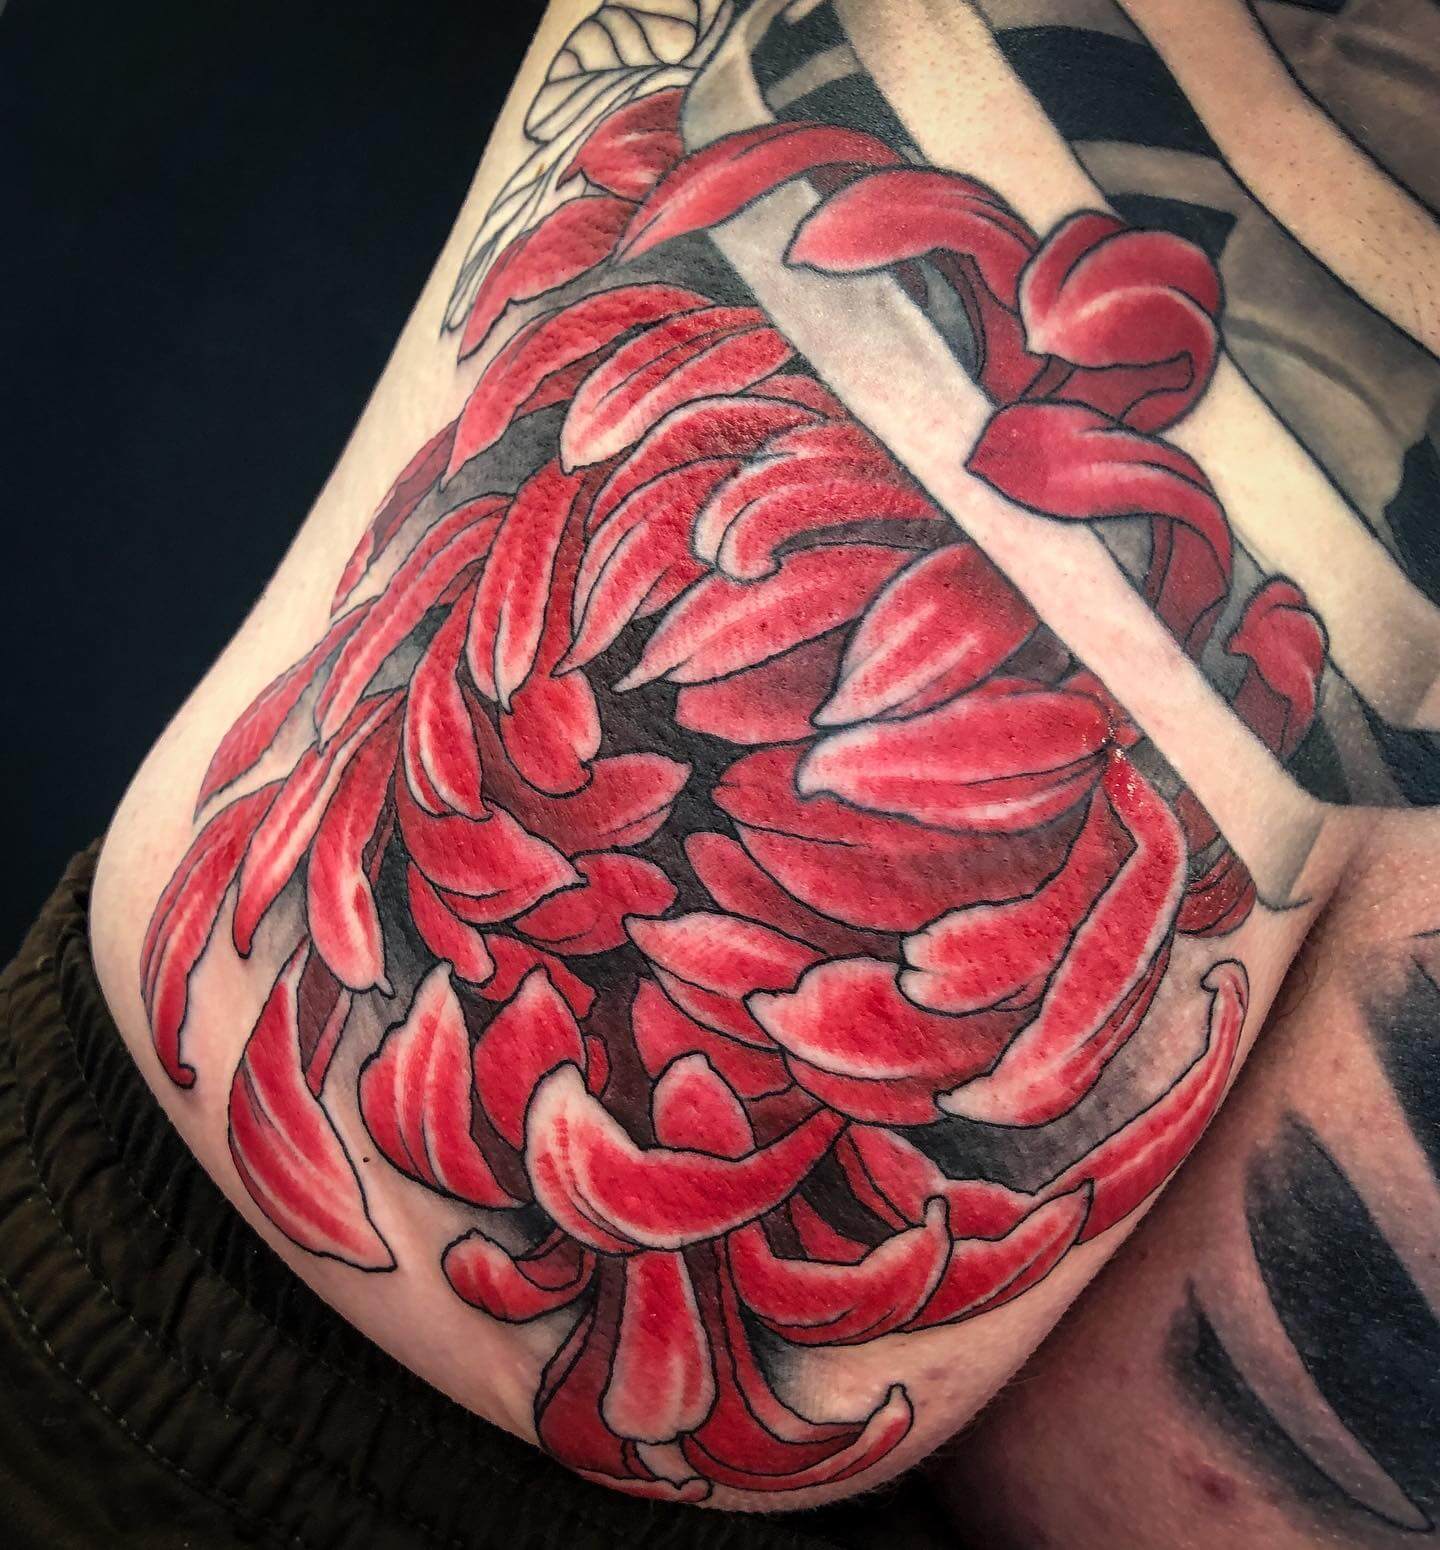 Red Chrysanthemums Tattoo